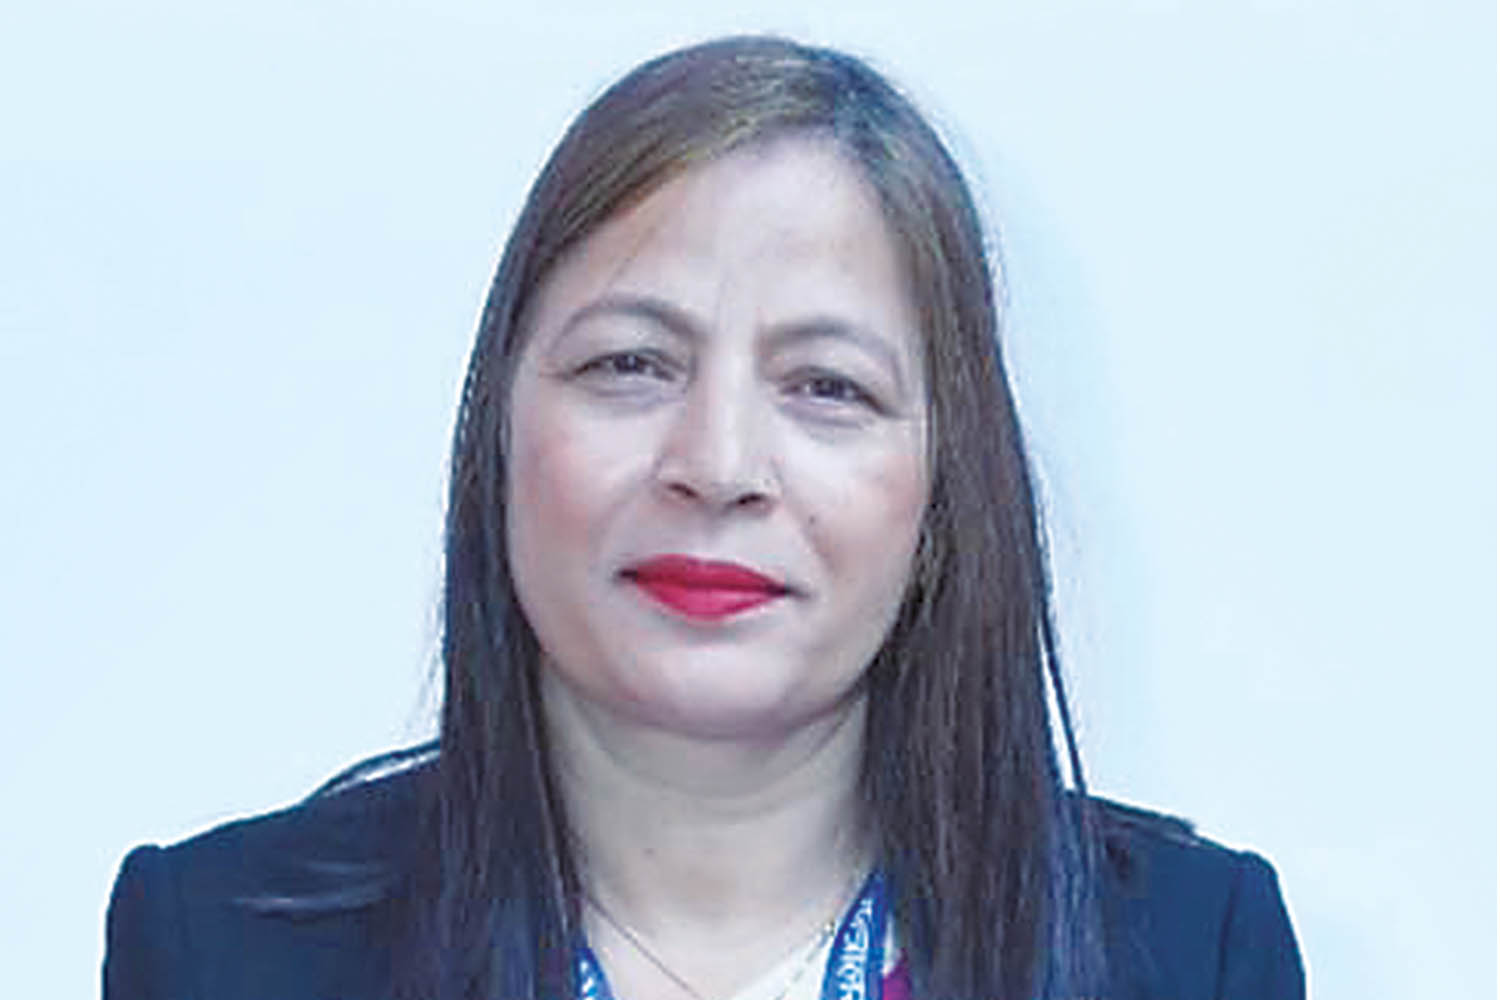 Sewa Lamsal becomes Nepal’s first female foreign secretary